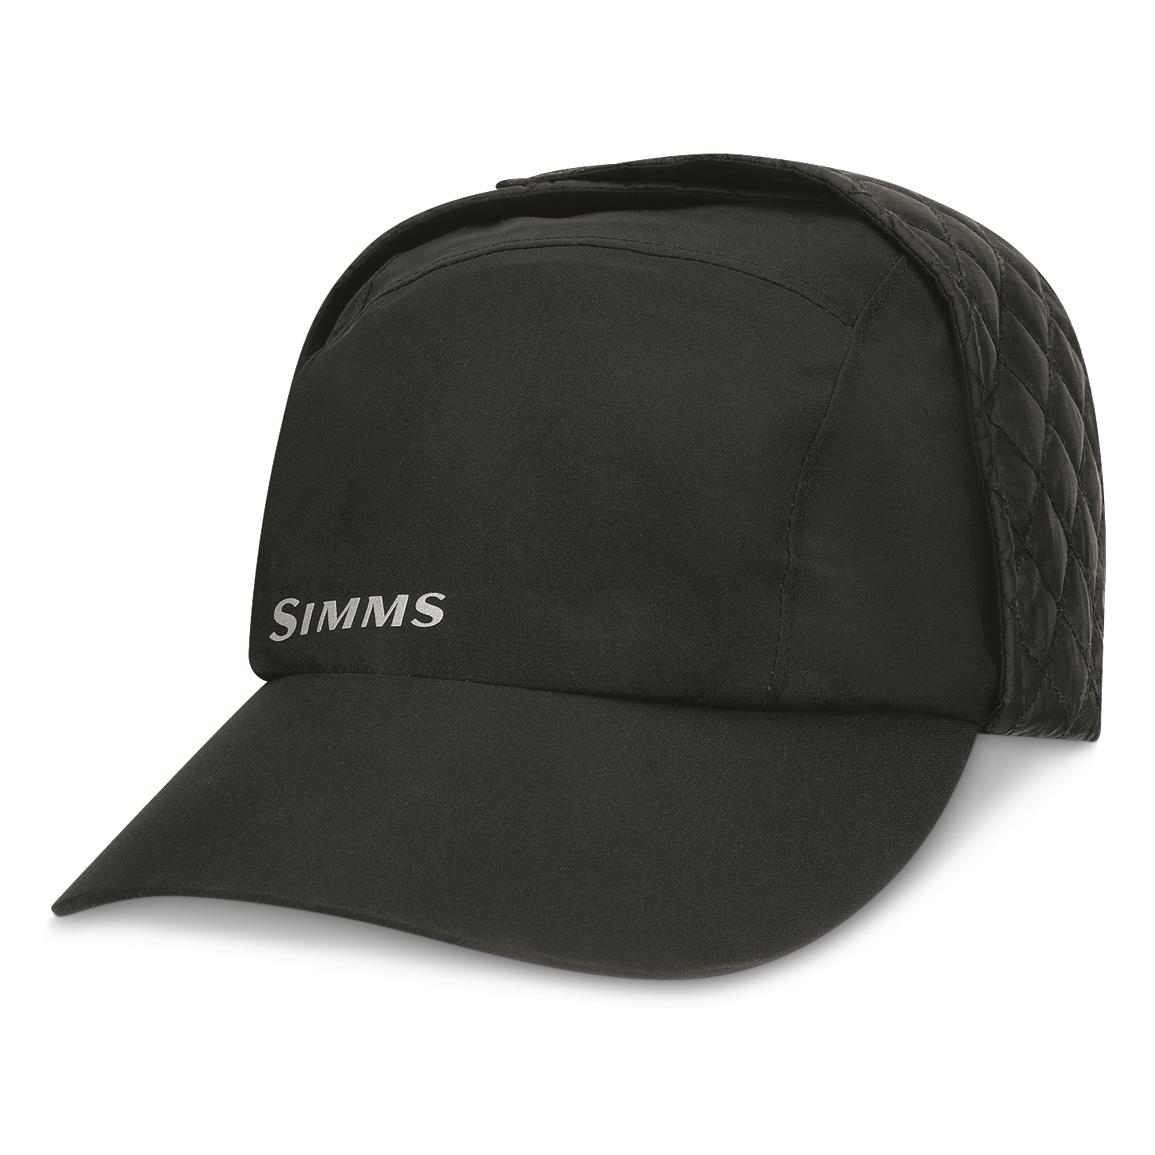 Simms ExStream Waterproof Insulated Hat, GORE-TEX, Black